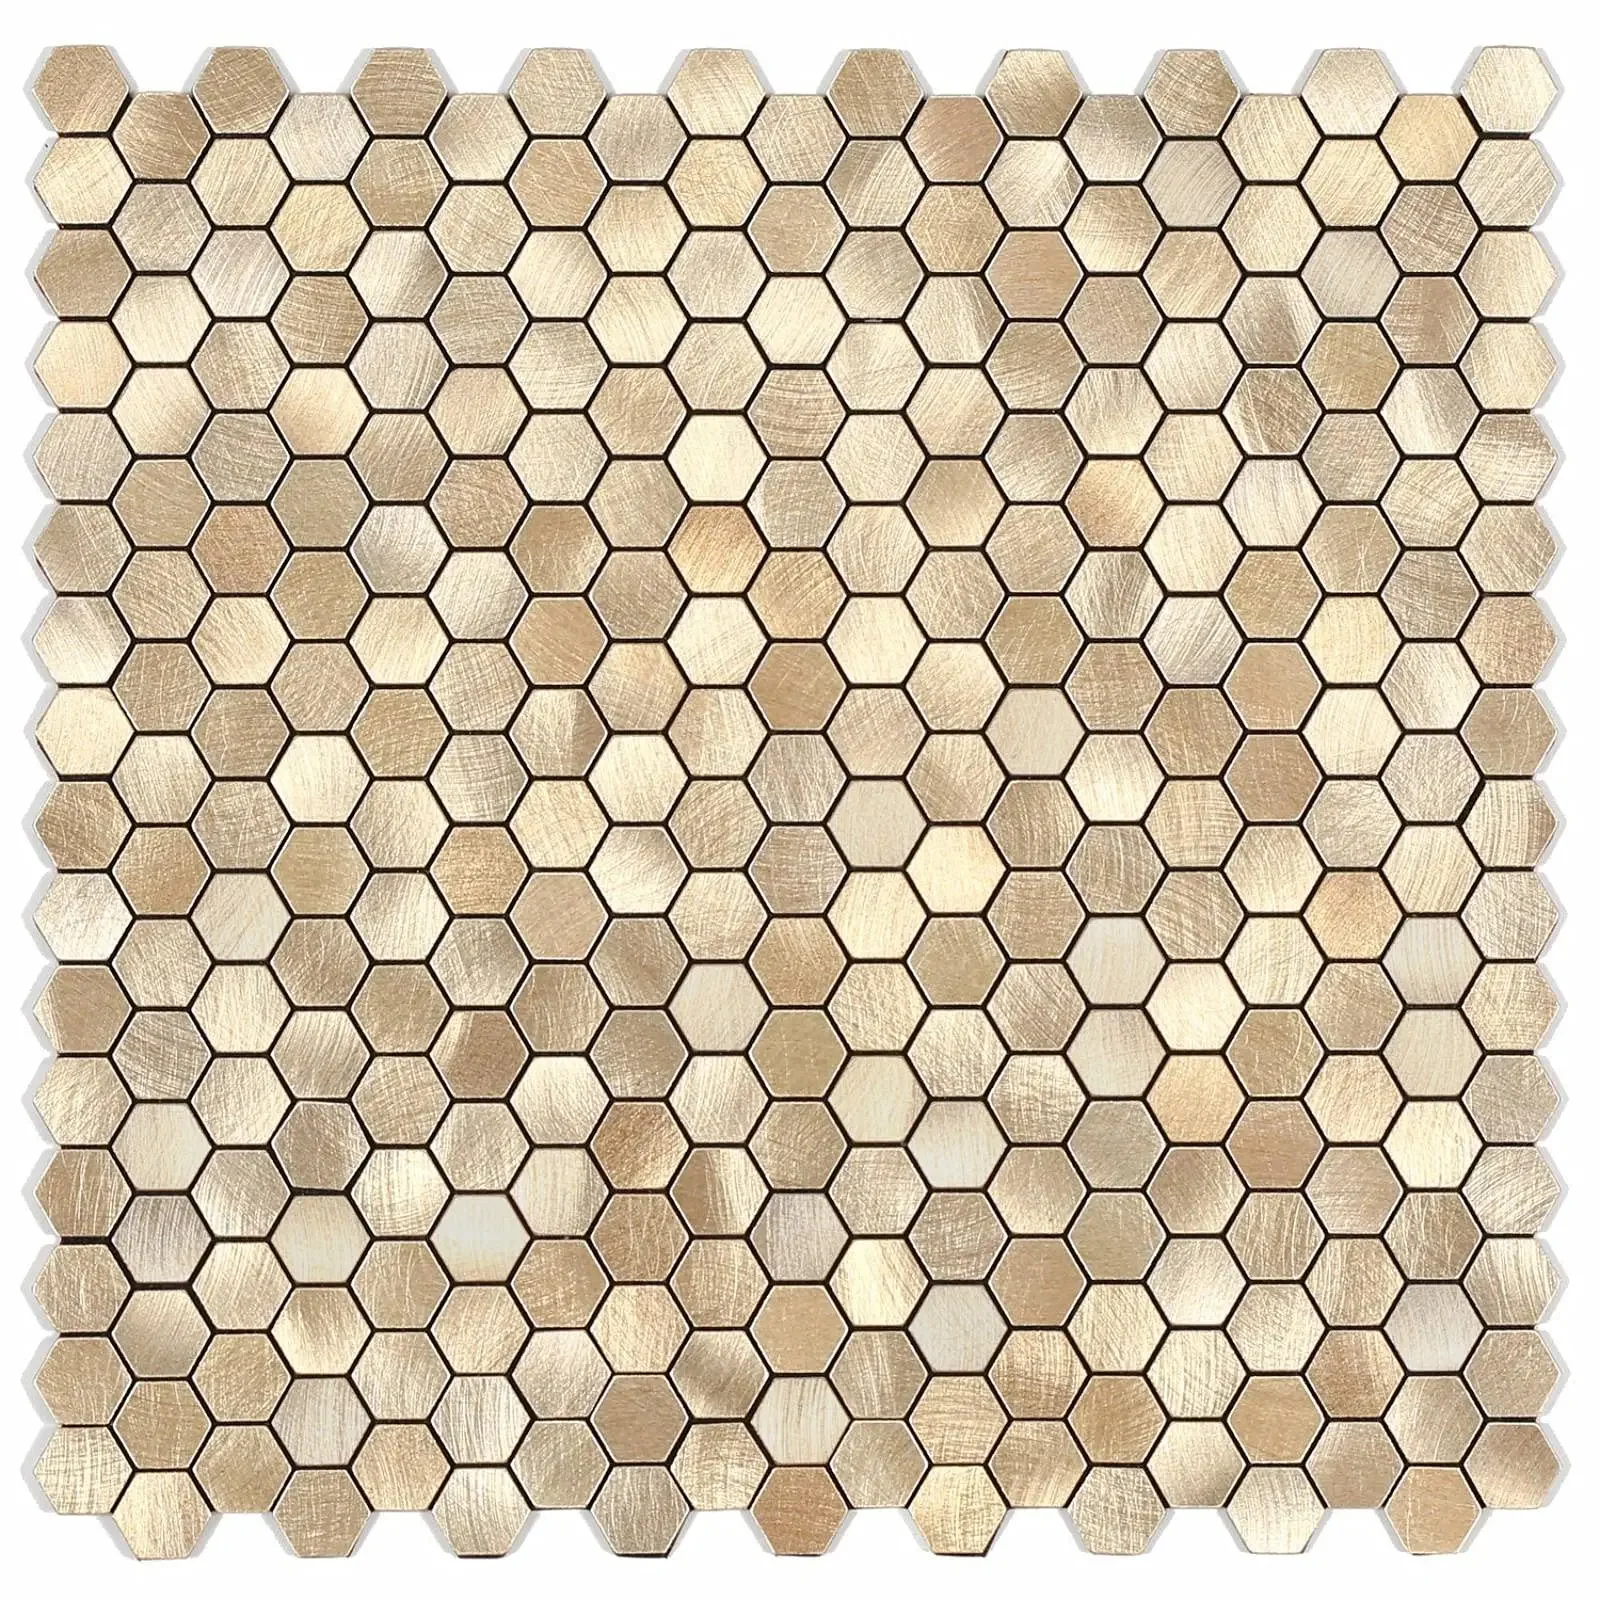 

Mosaic Kitchen Backsplash Tiles Peel and Stick Self Adhesive Metallic Tiles Waterproof 3d Wall Gold Panels Bath Tile Backsplash